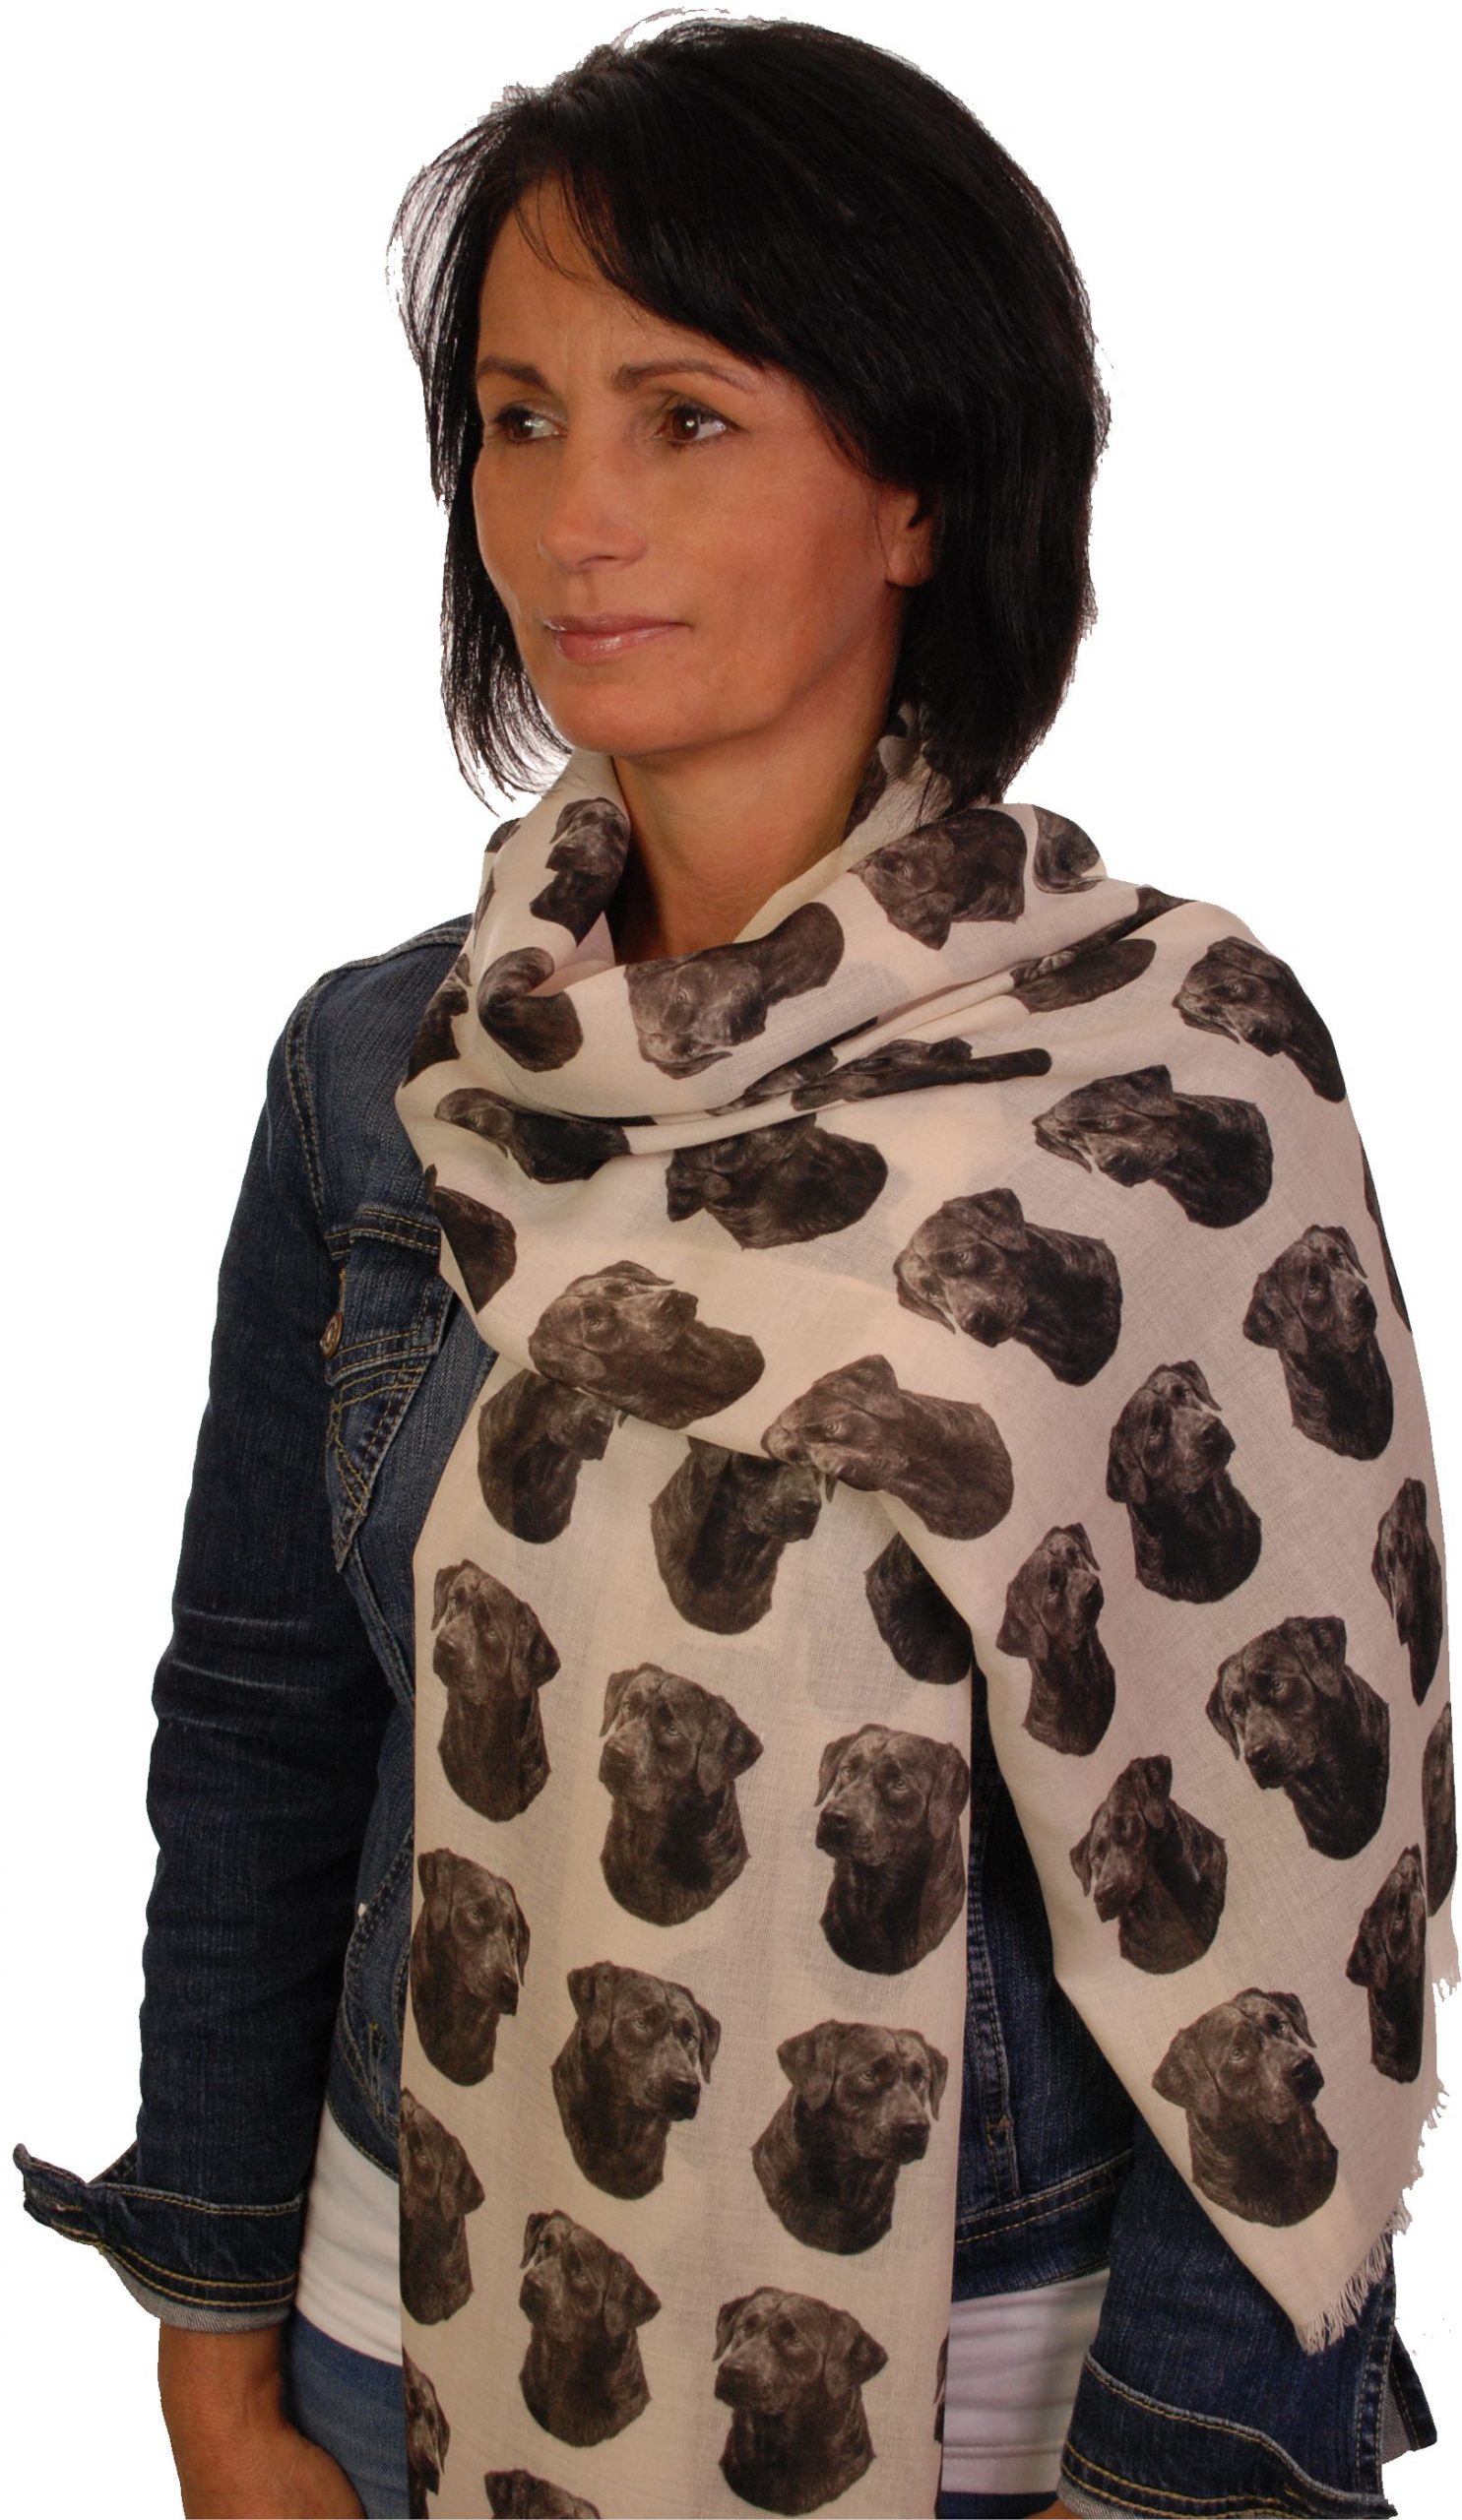 Mike Sibley Black Labrador licensed design ladies fashion scarf